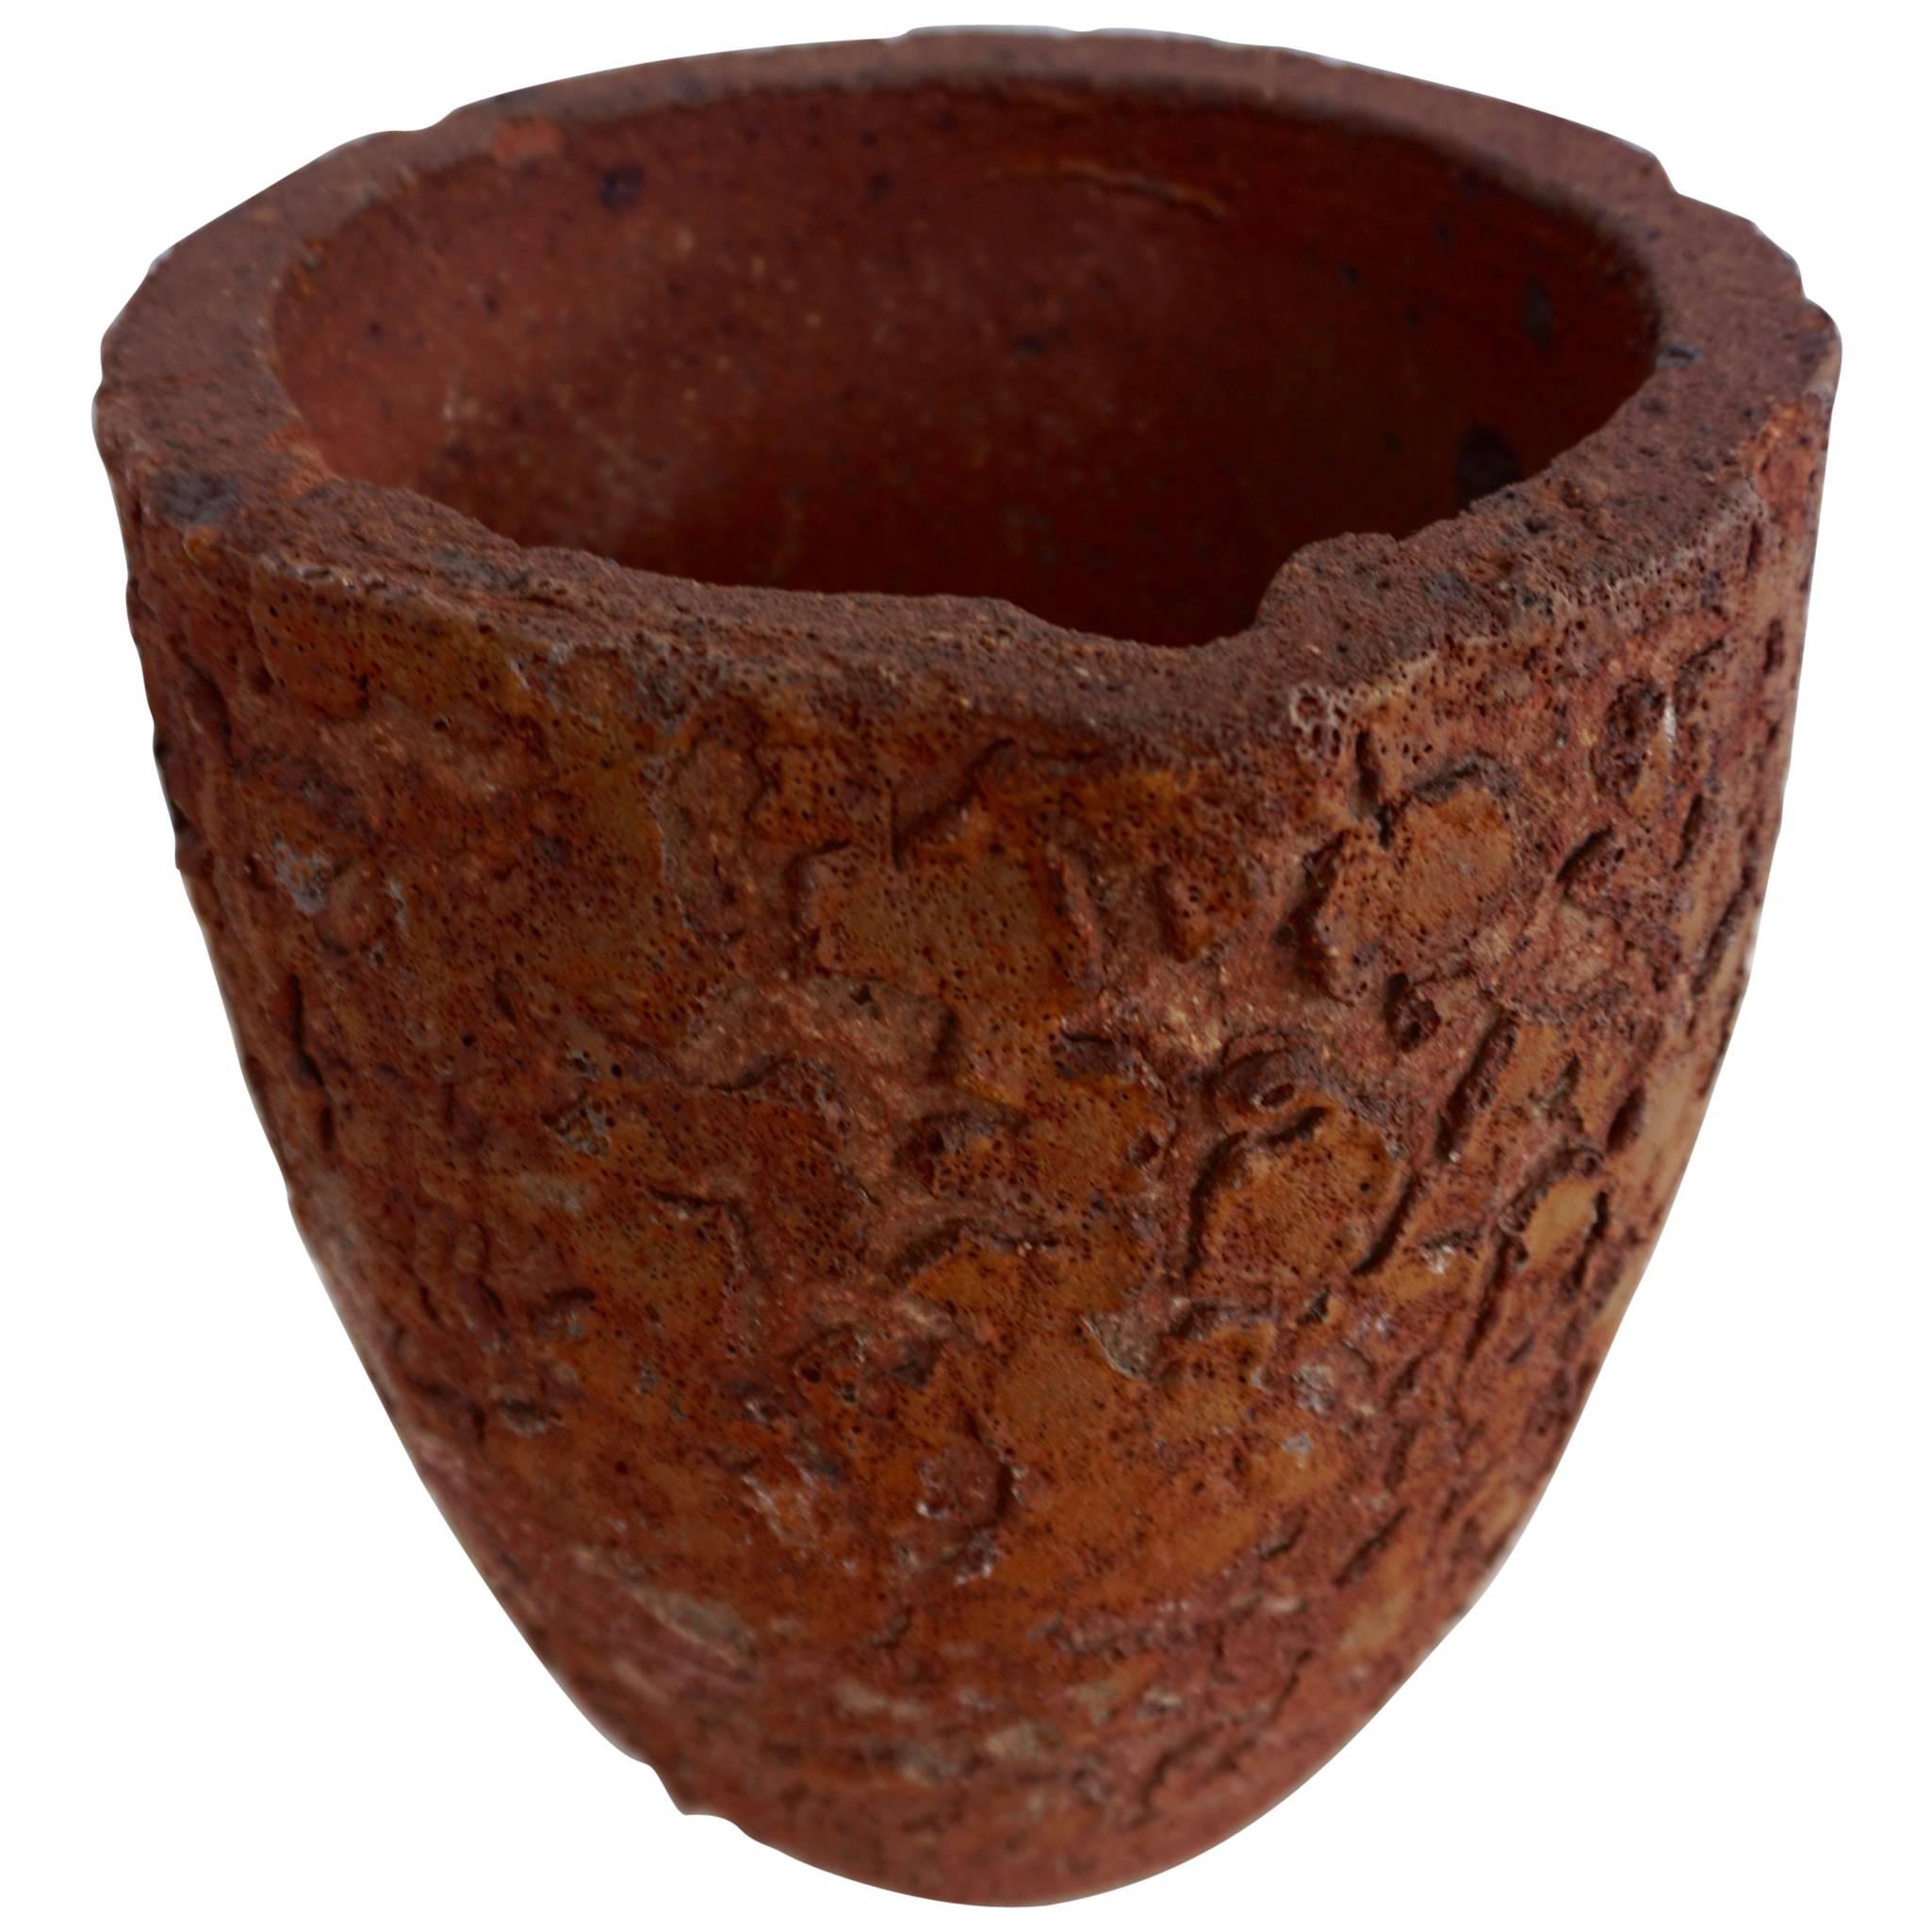 Ceramic Smelting Crucible or Planter